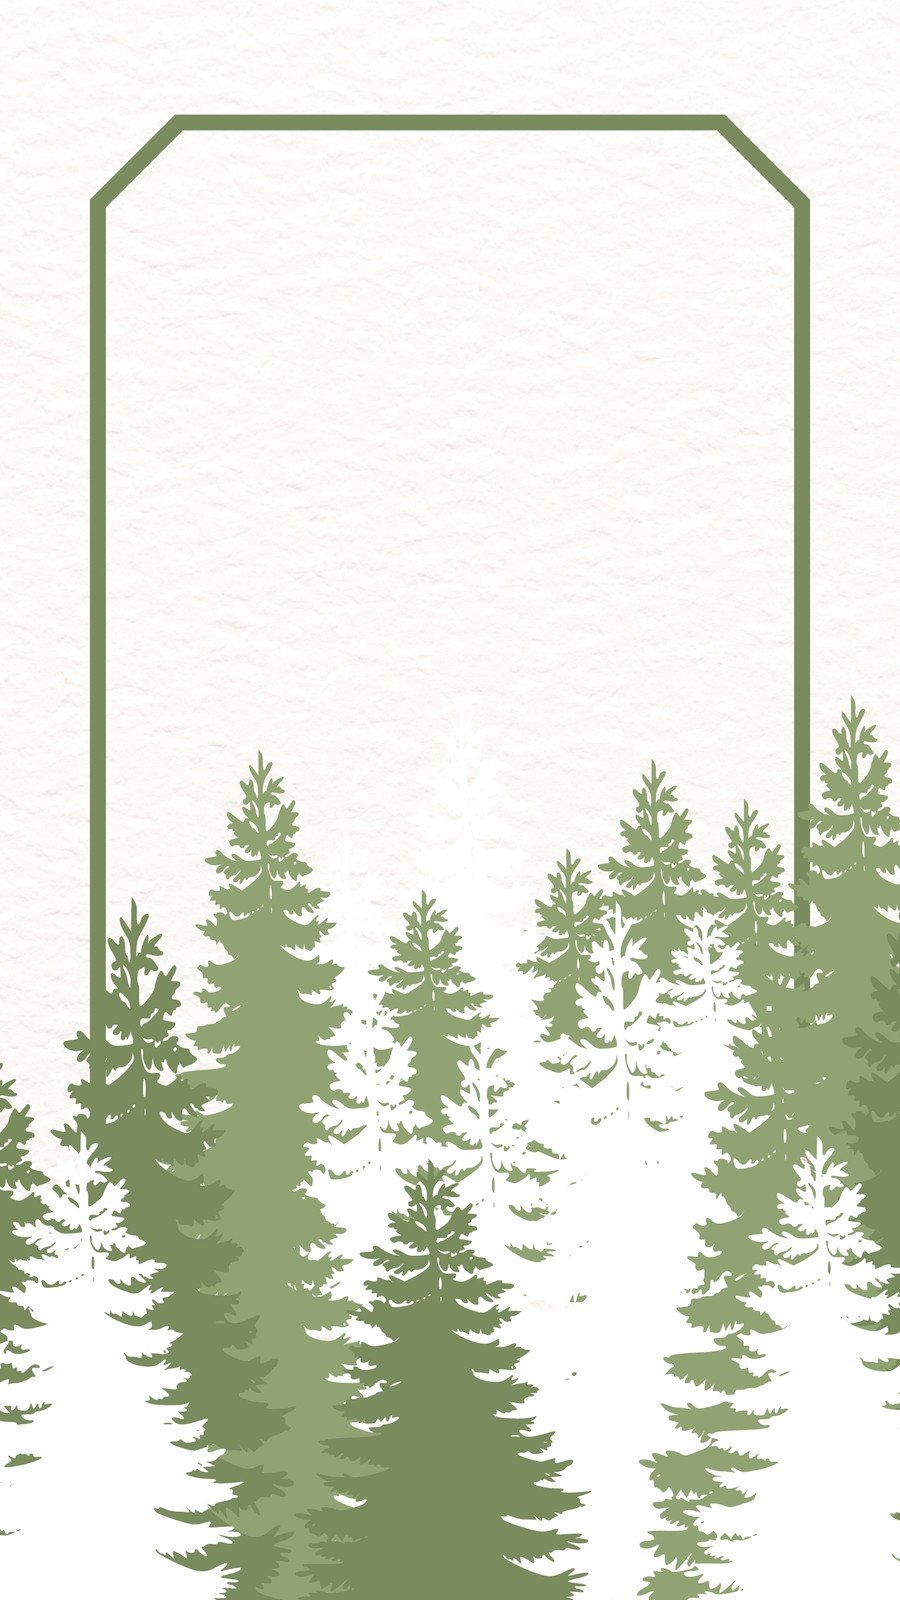 https://marketplace.canva.com/EAFSBQvlPyU/1/0/900w/canva-white-green-pine-trees-forest-in-winter-phone-wallpaper-DN2PwZMR2Eo.jpg